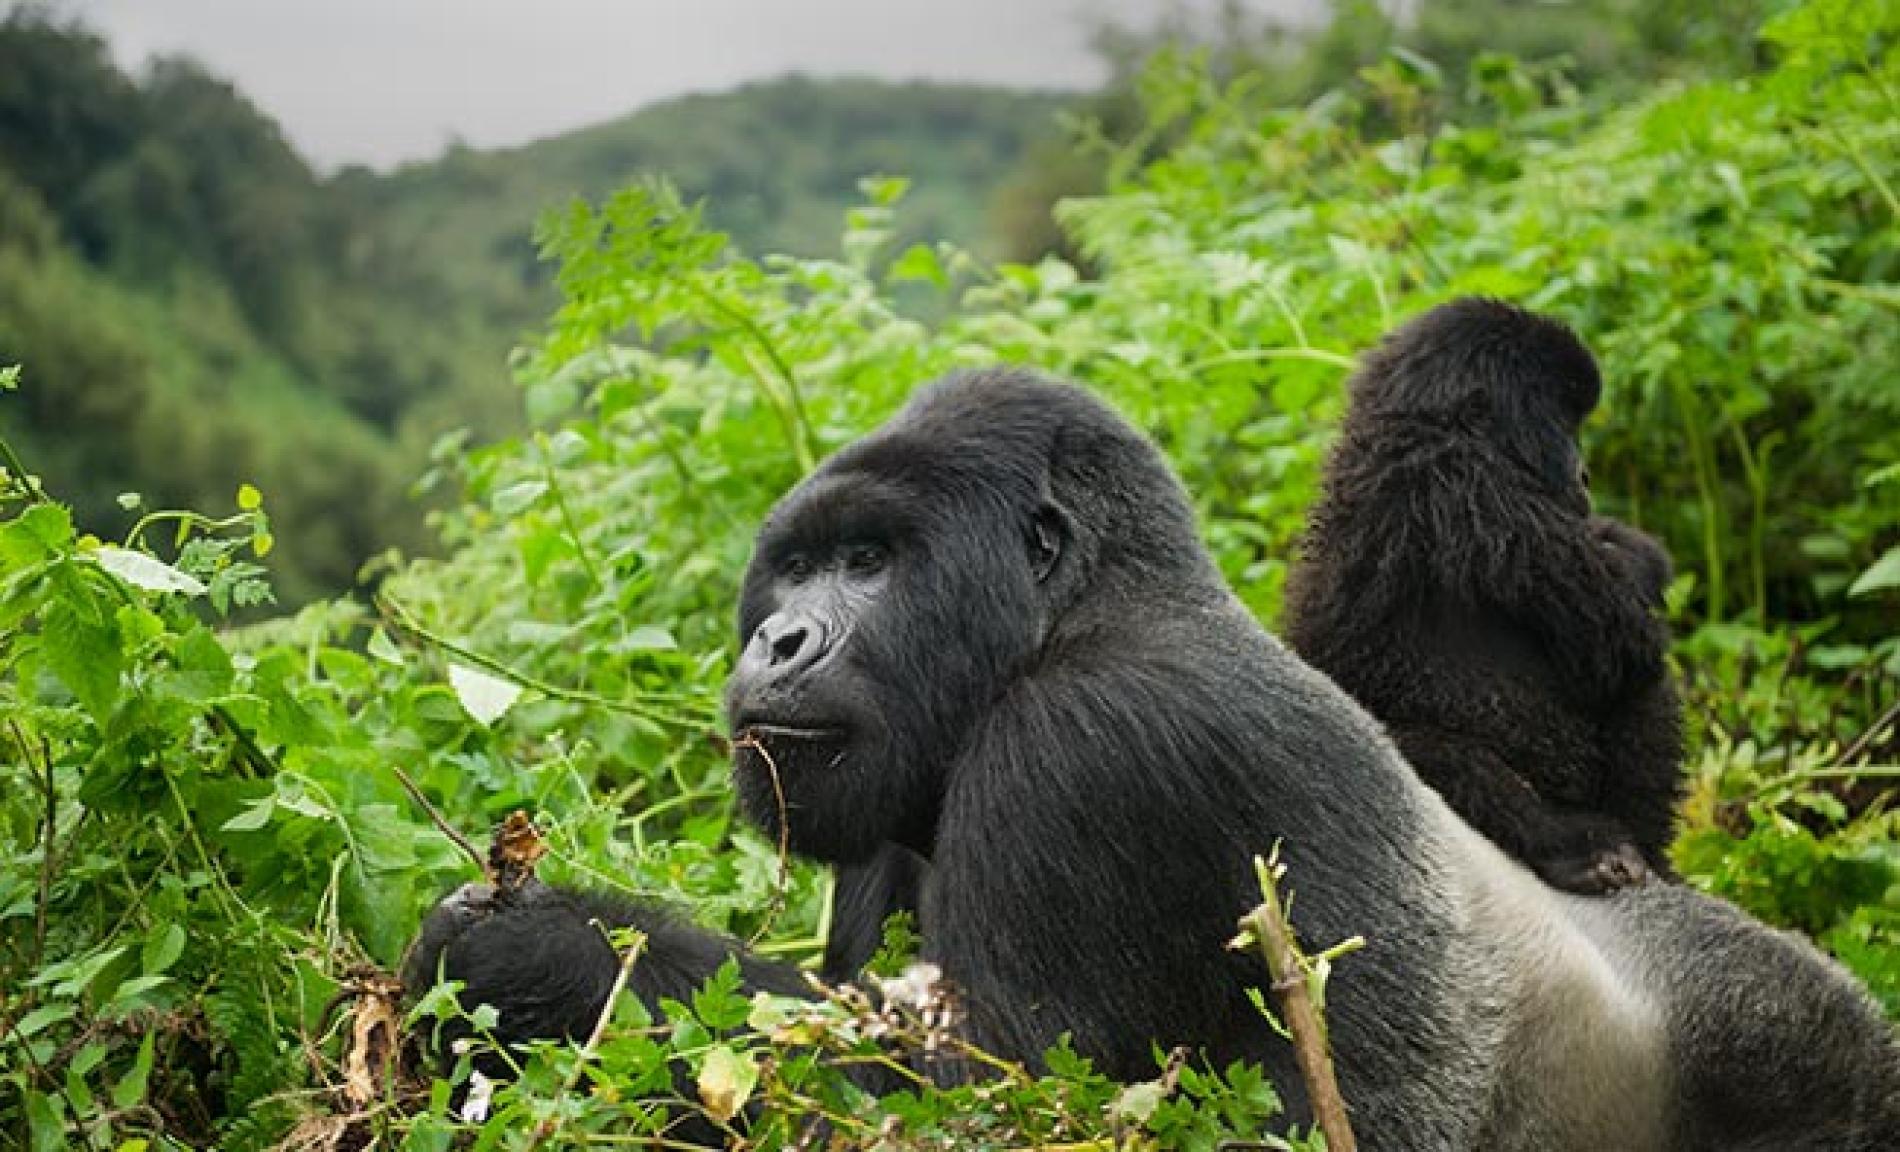 Gorilla trekking in Rwanda is a key contributor to the economy. 